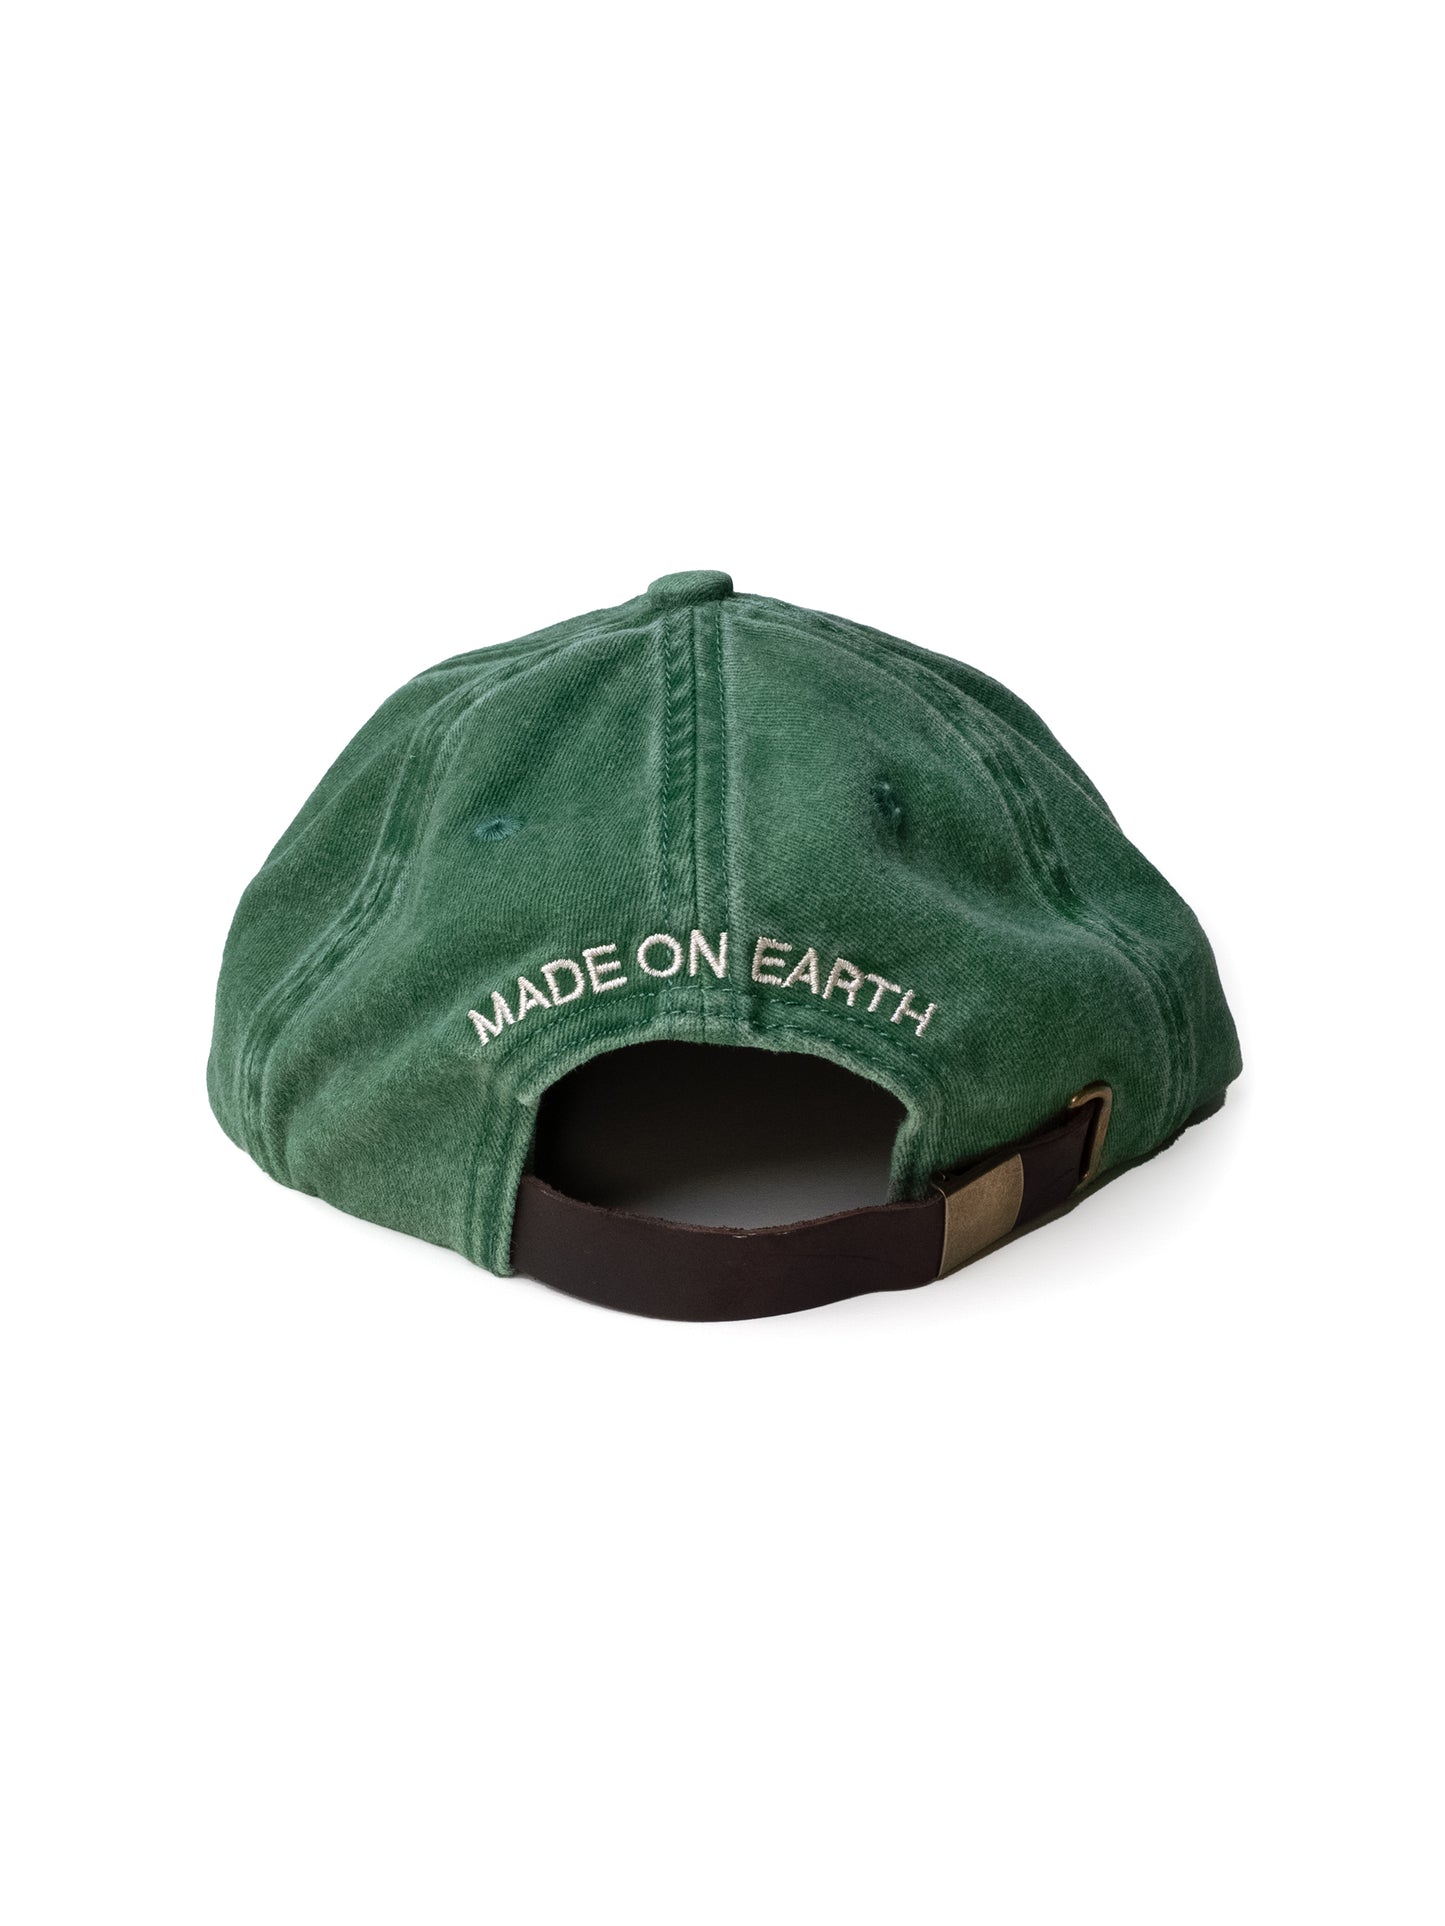 Classic Green Upside Down A Hat